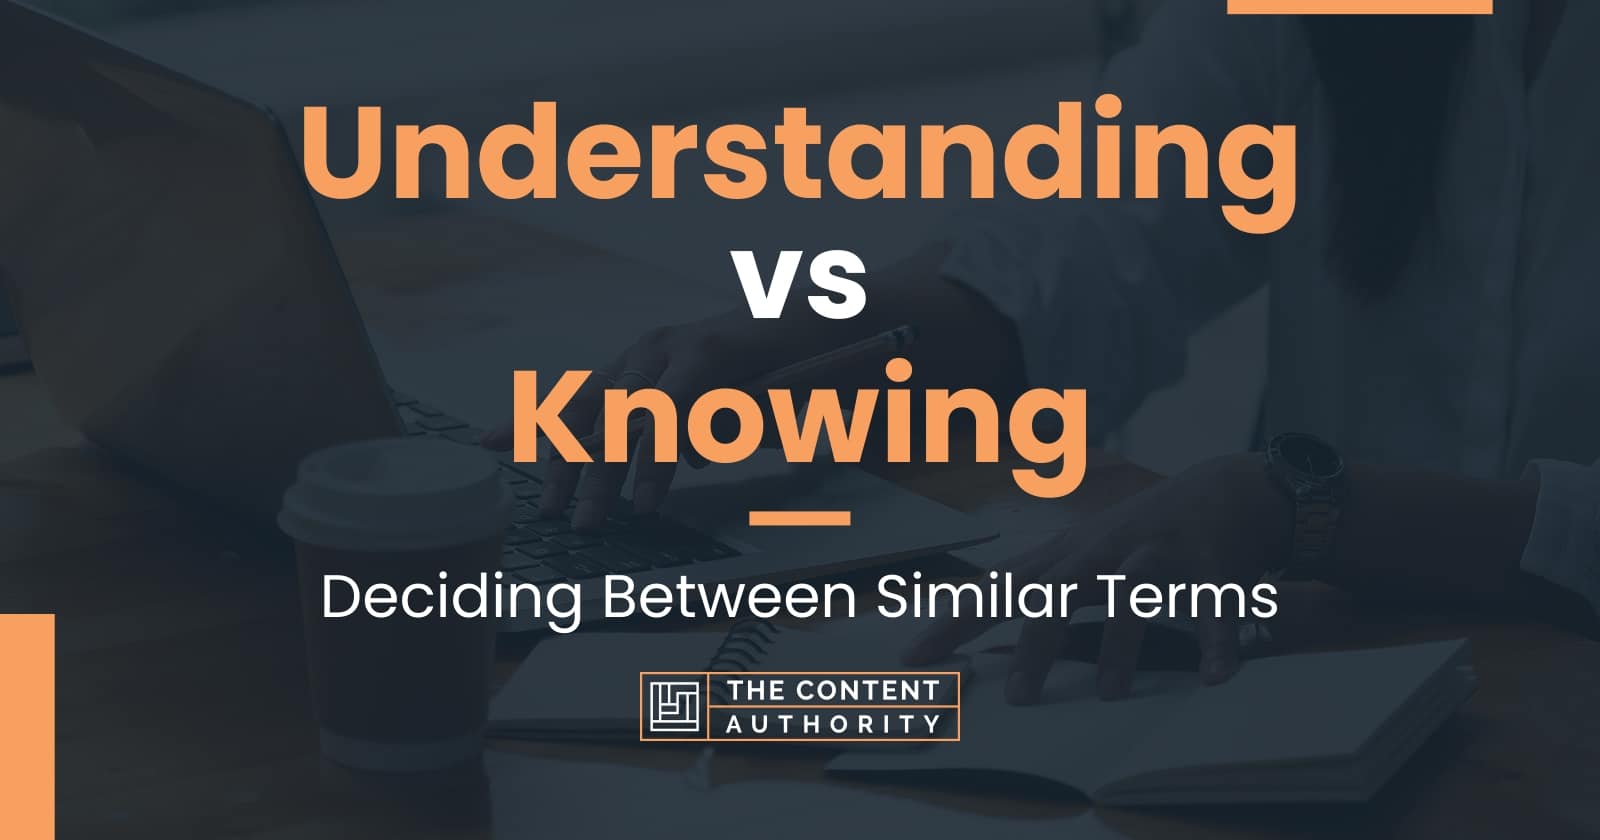 Understanding Vs Knowing Deciding Between Similar Terms